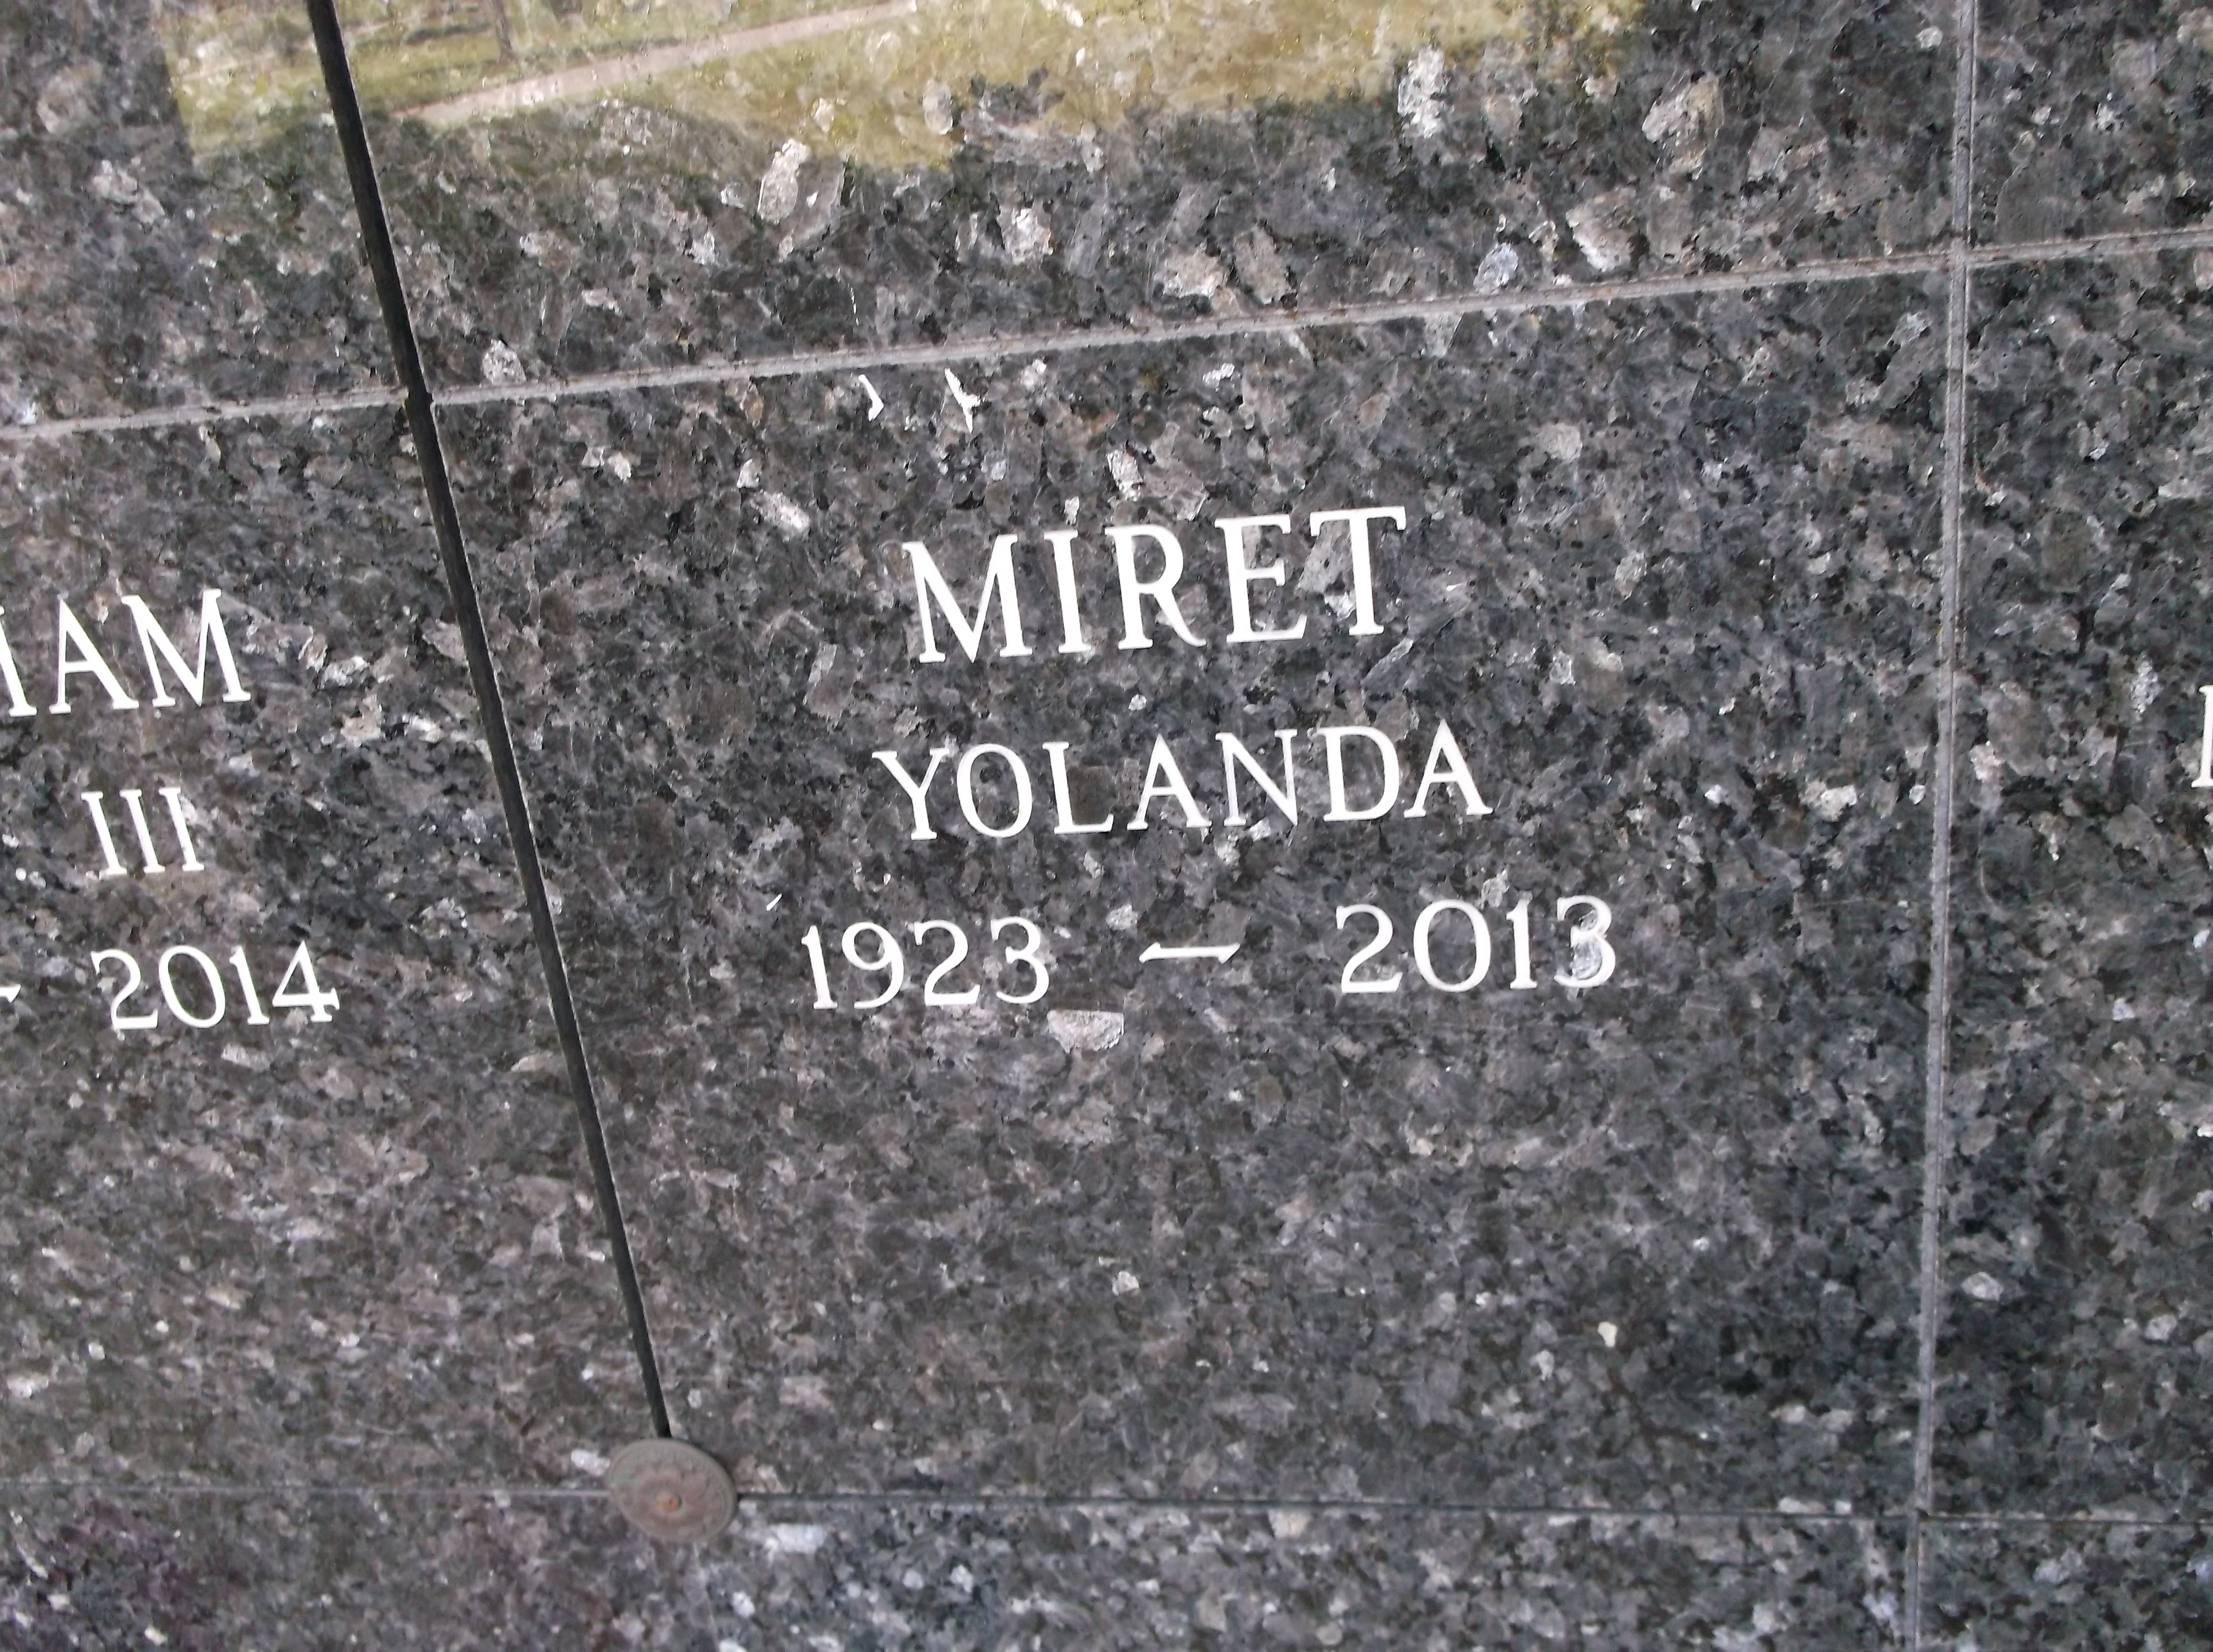 Yolanda Miret